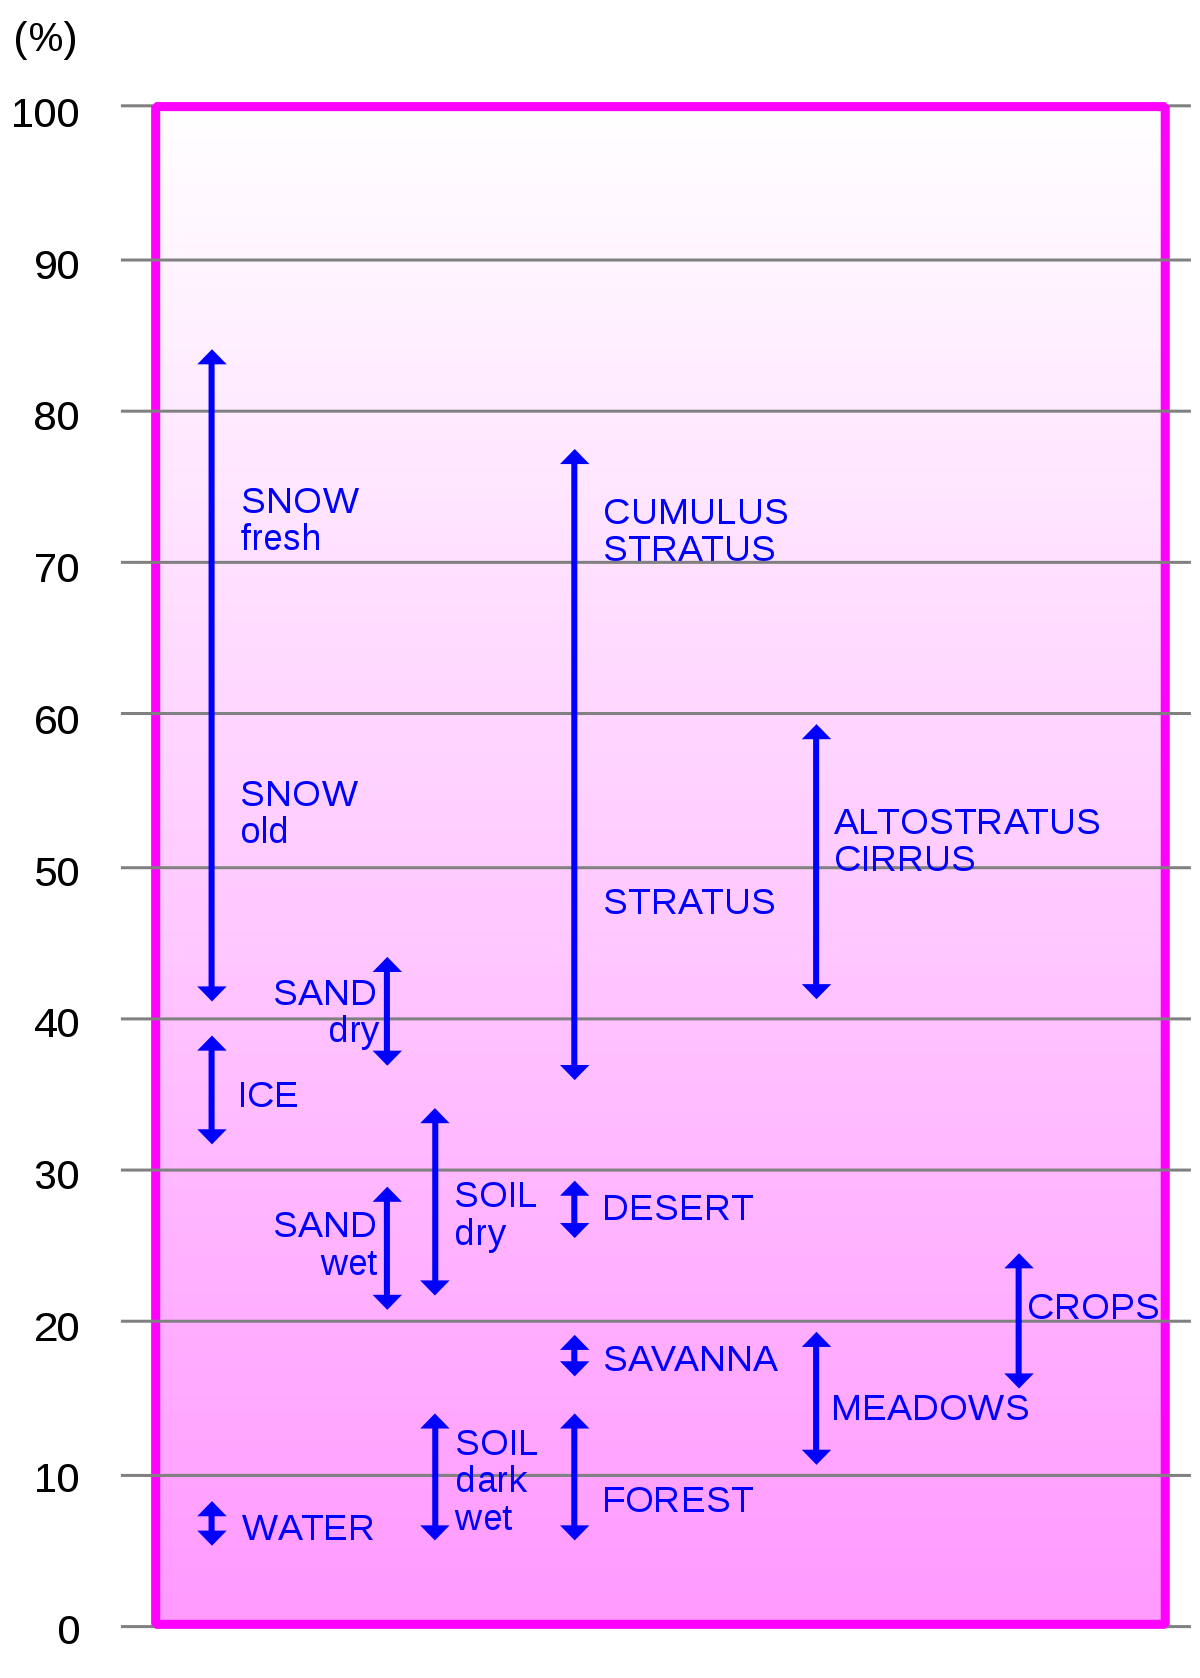 Snow Ratio Chart